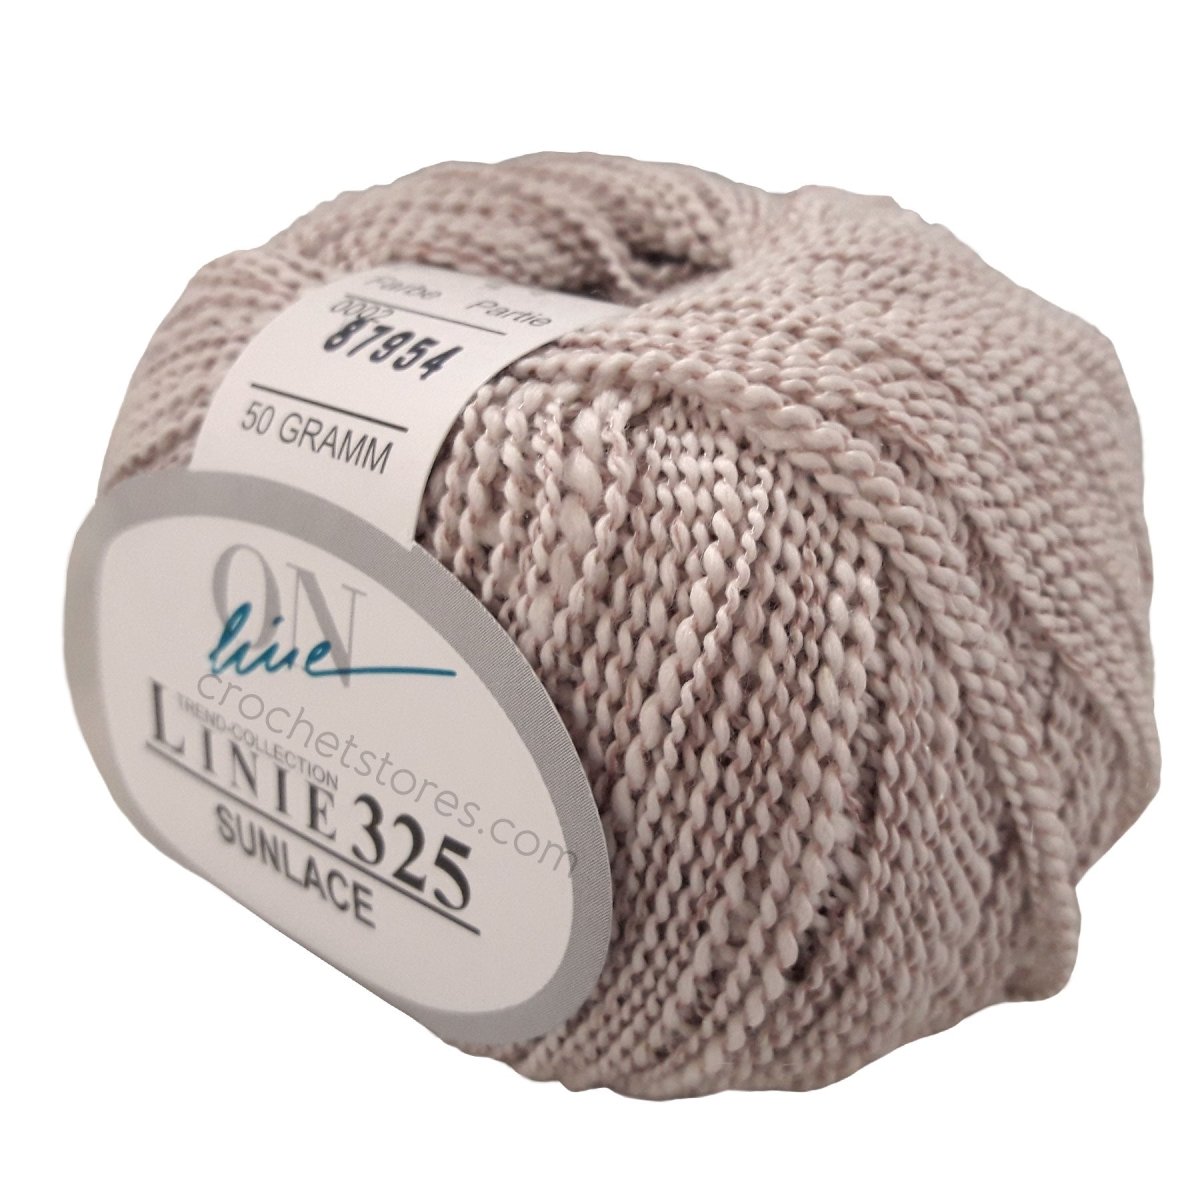 SUNLACE - Crochetstores110325-0024014366138372